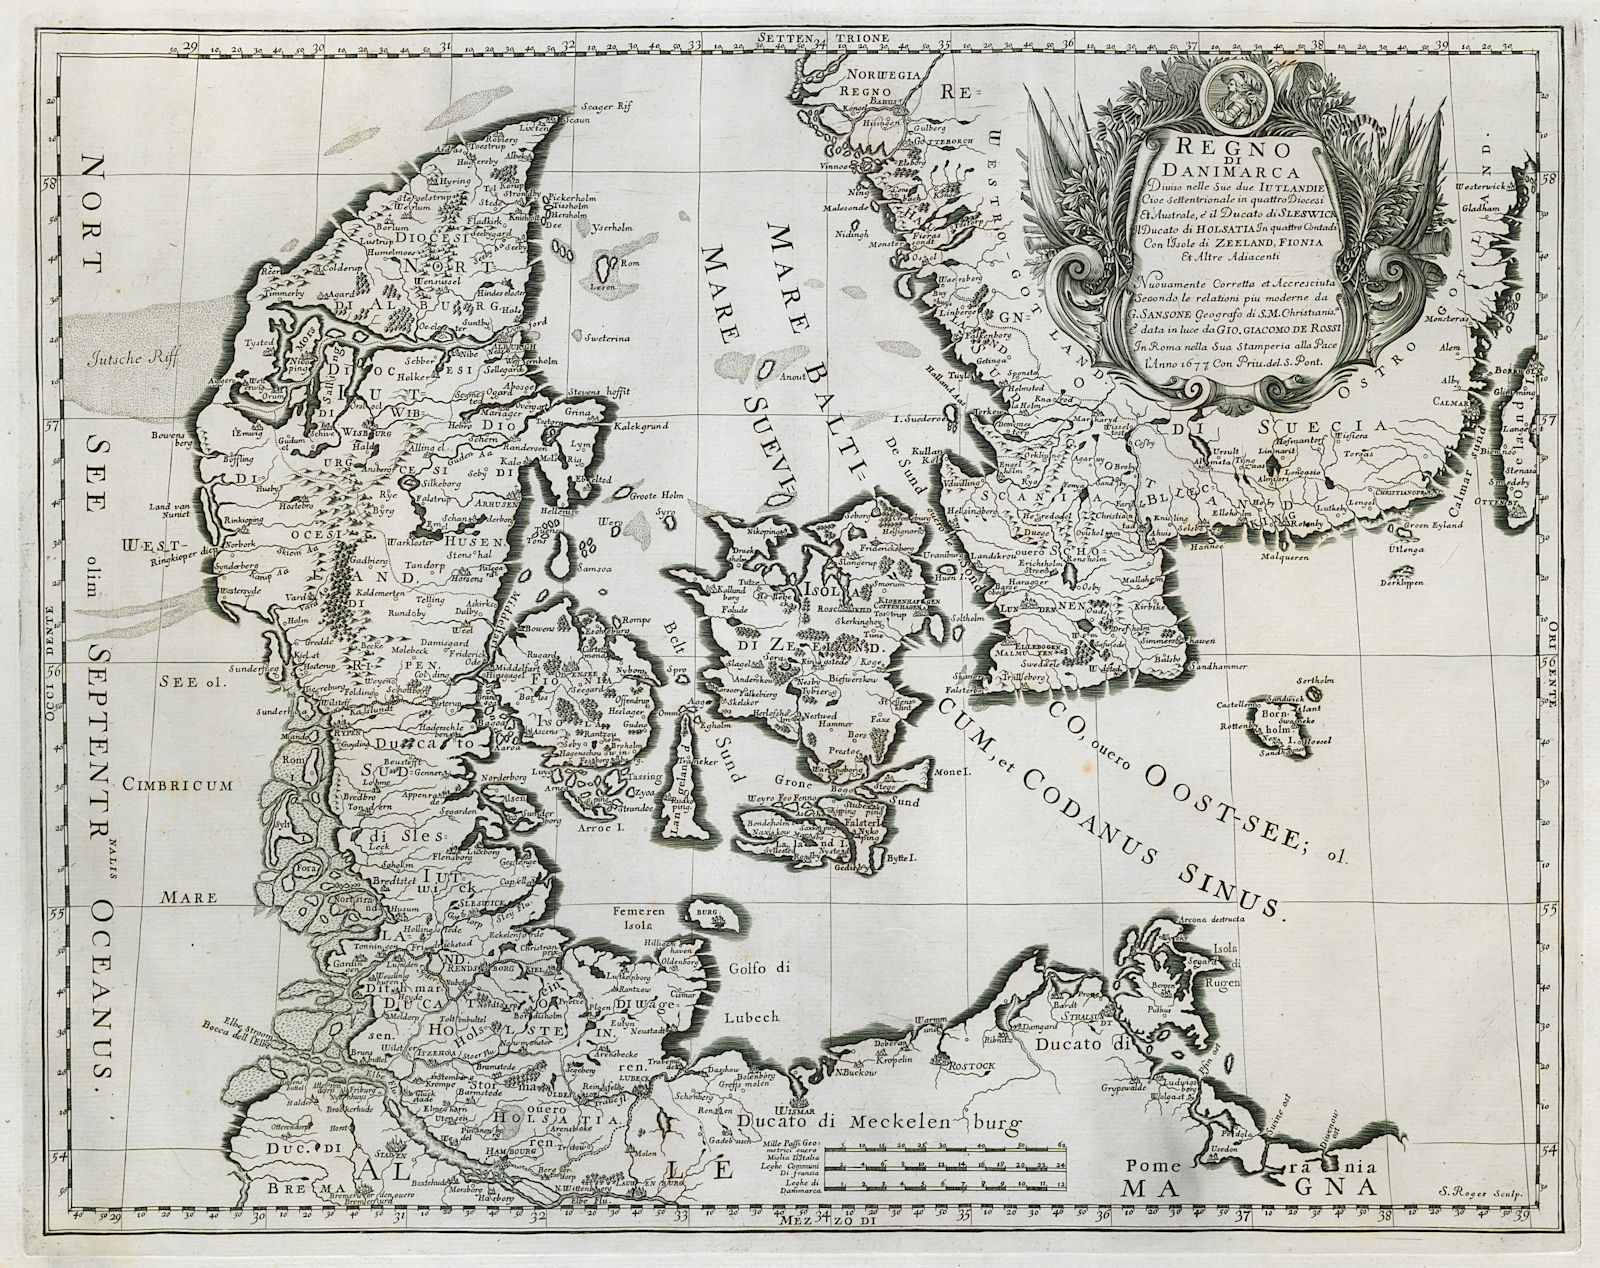 Associate Product Regno di Danimarca. The Kingdom of Denmark. DE ROSSI 1677 old antique map